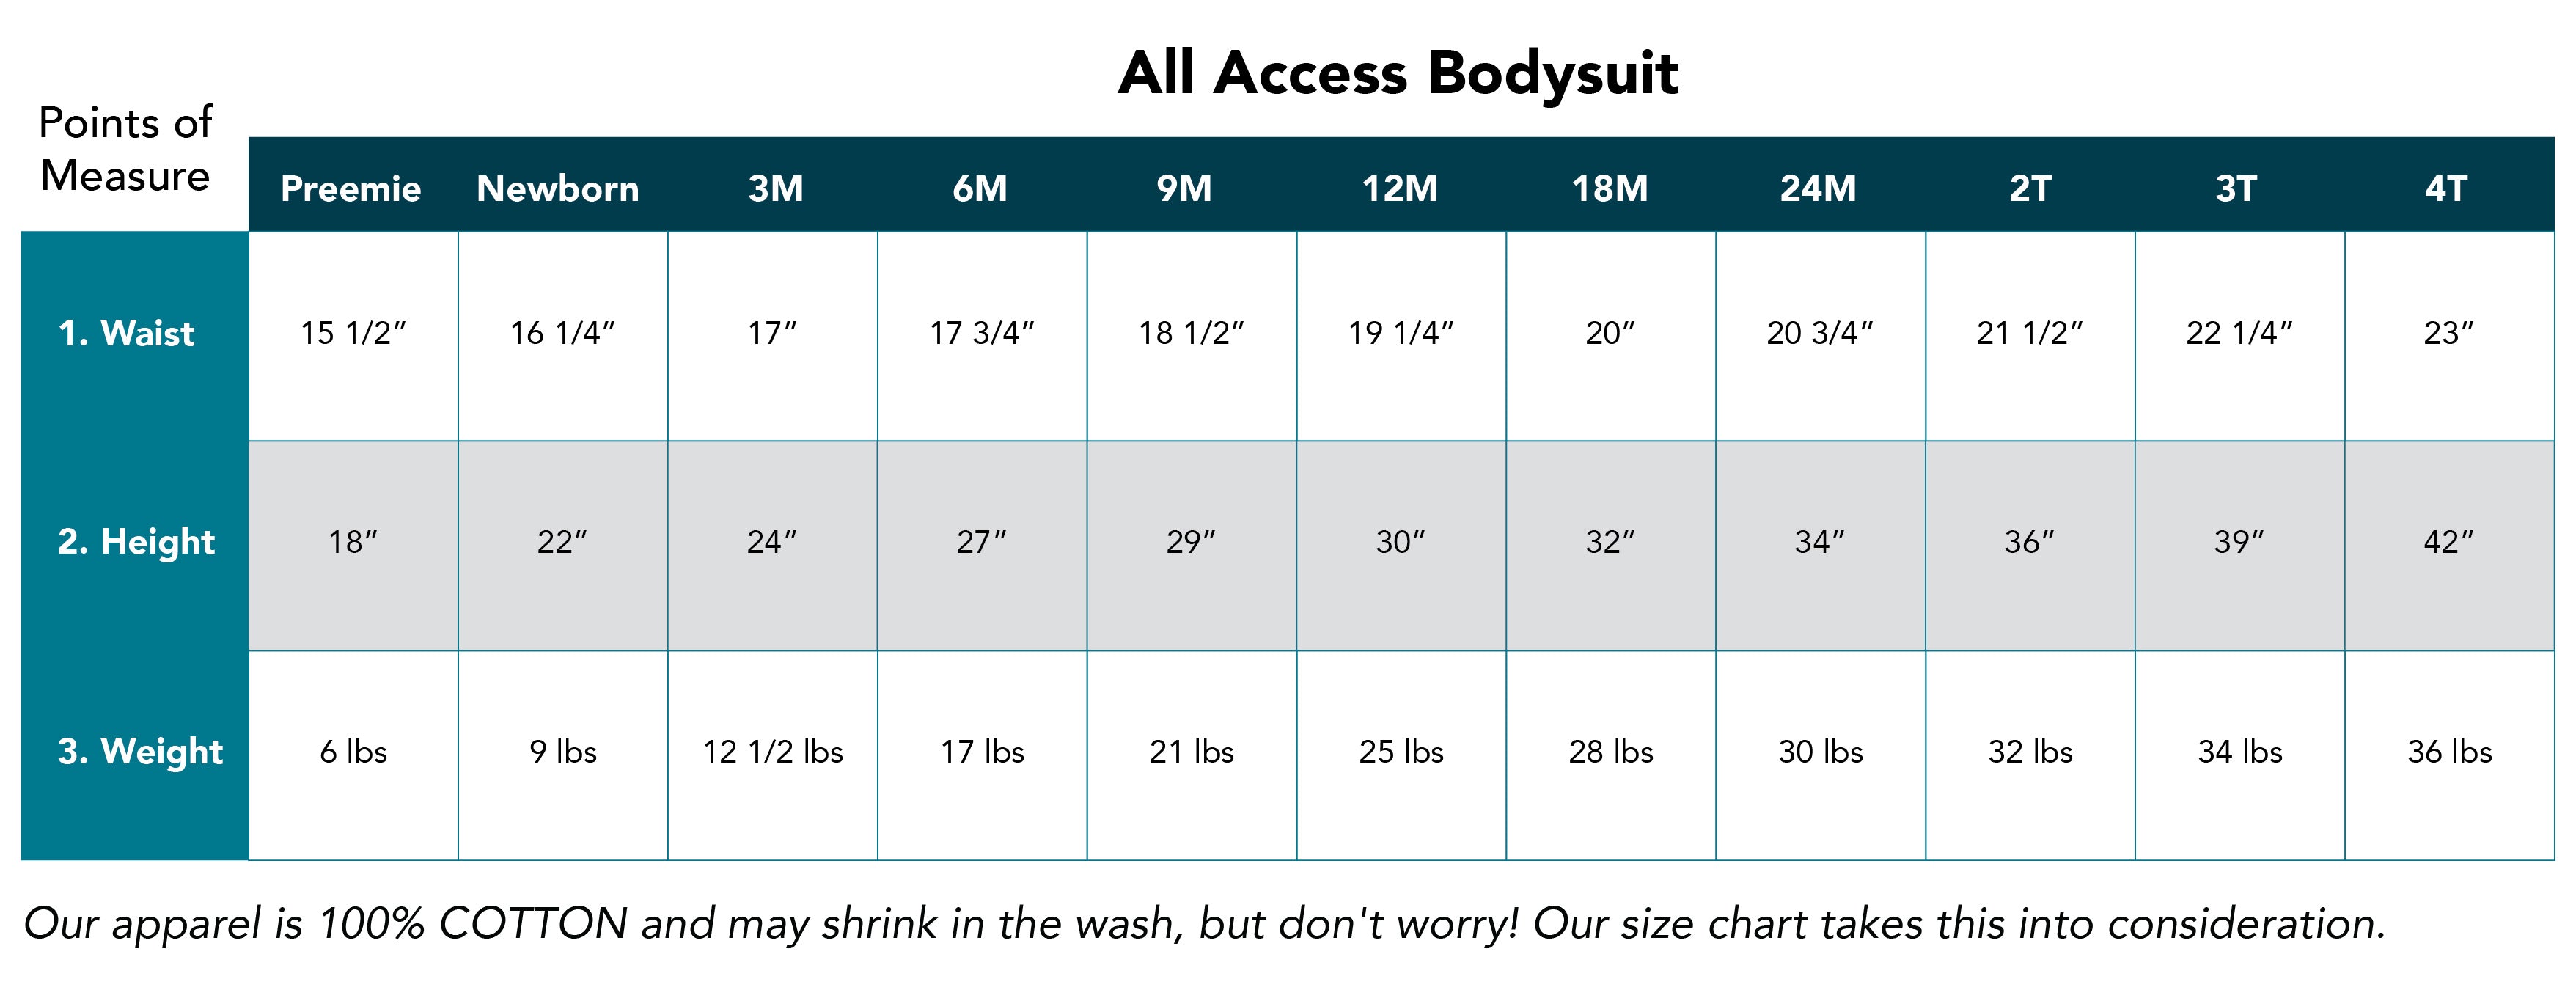 All Access Bodysuit Size Chart